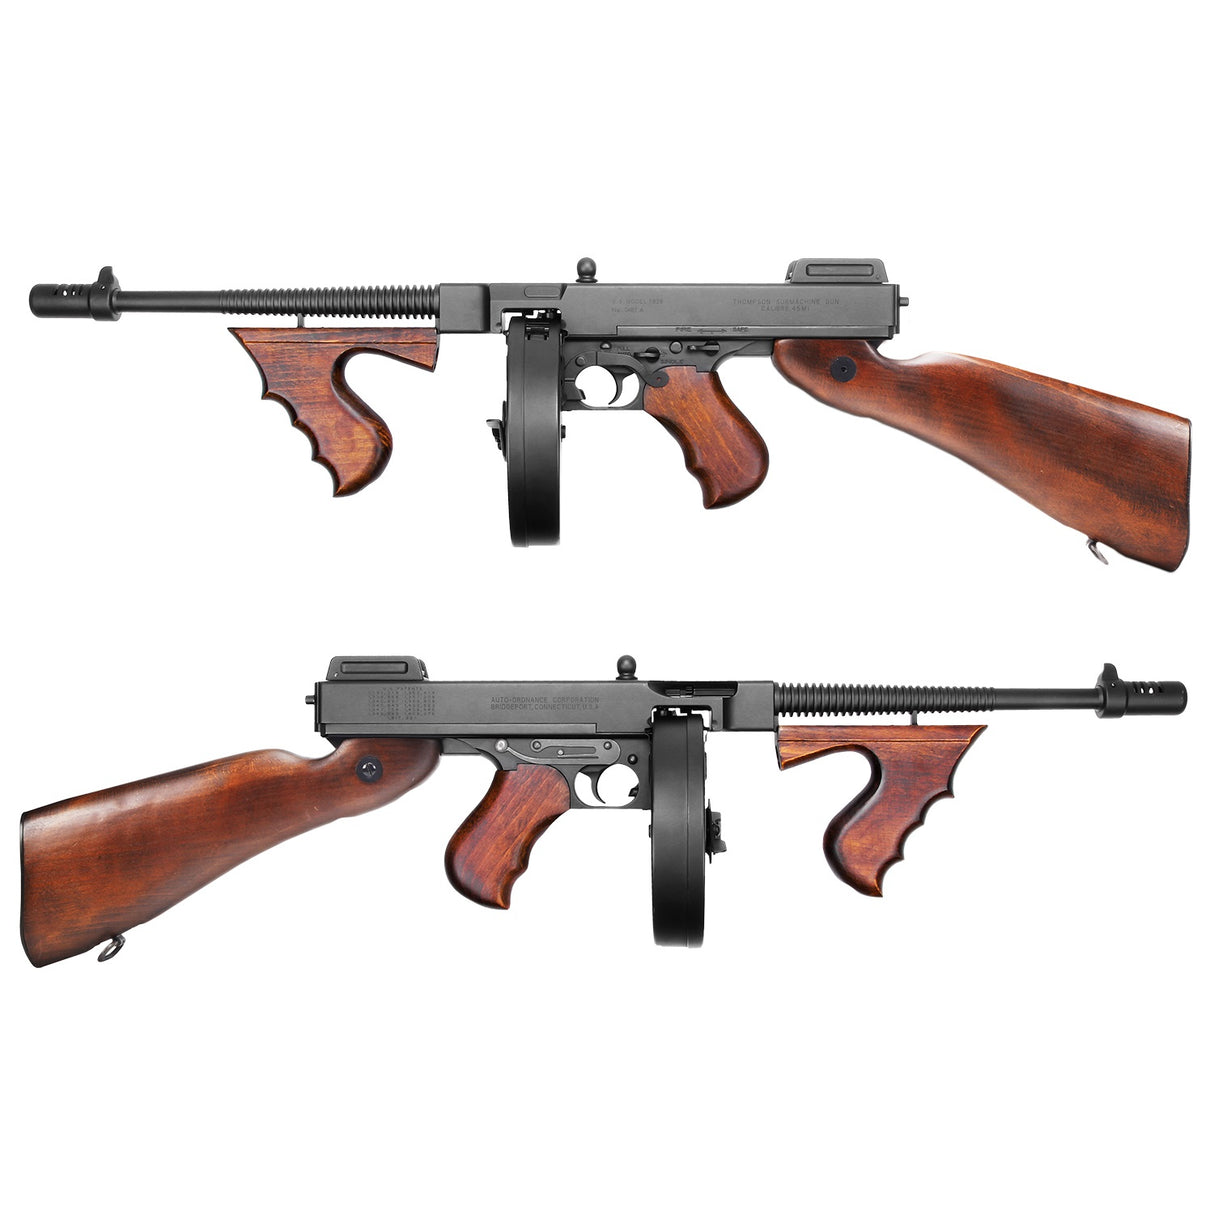 King Arms Thompson M1928 芝加哥 AEG 氣槍 - 實木 ( AG-258-WO )